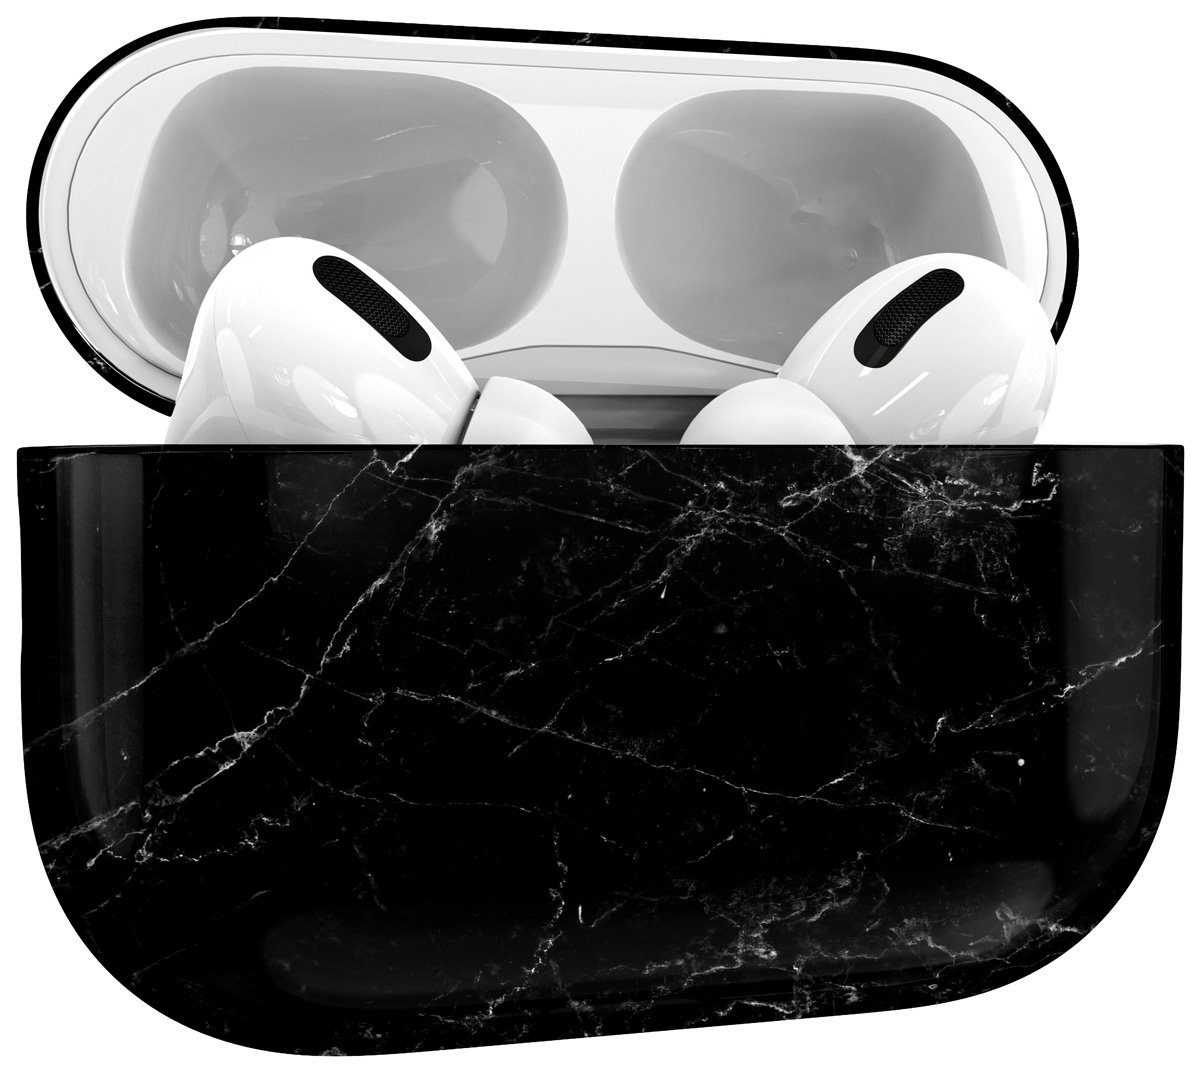 MyGadget Kopfhörer-Schutzhülle Hülle [ Marmor Muster ] Apple Airpods Pro, für Apple Airpods Pro